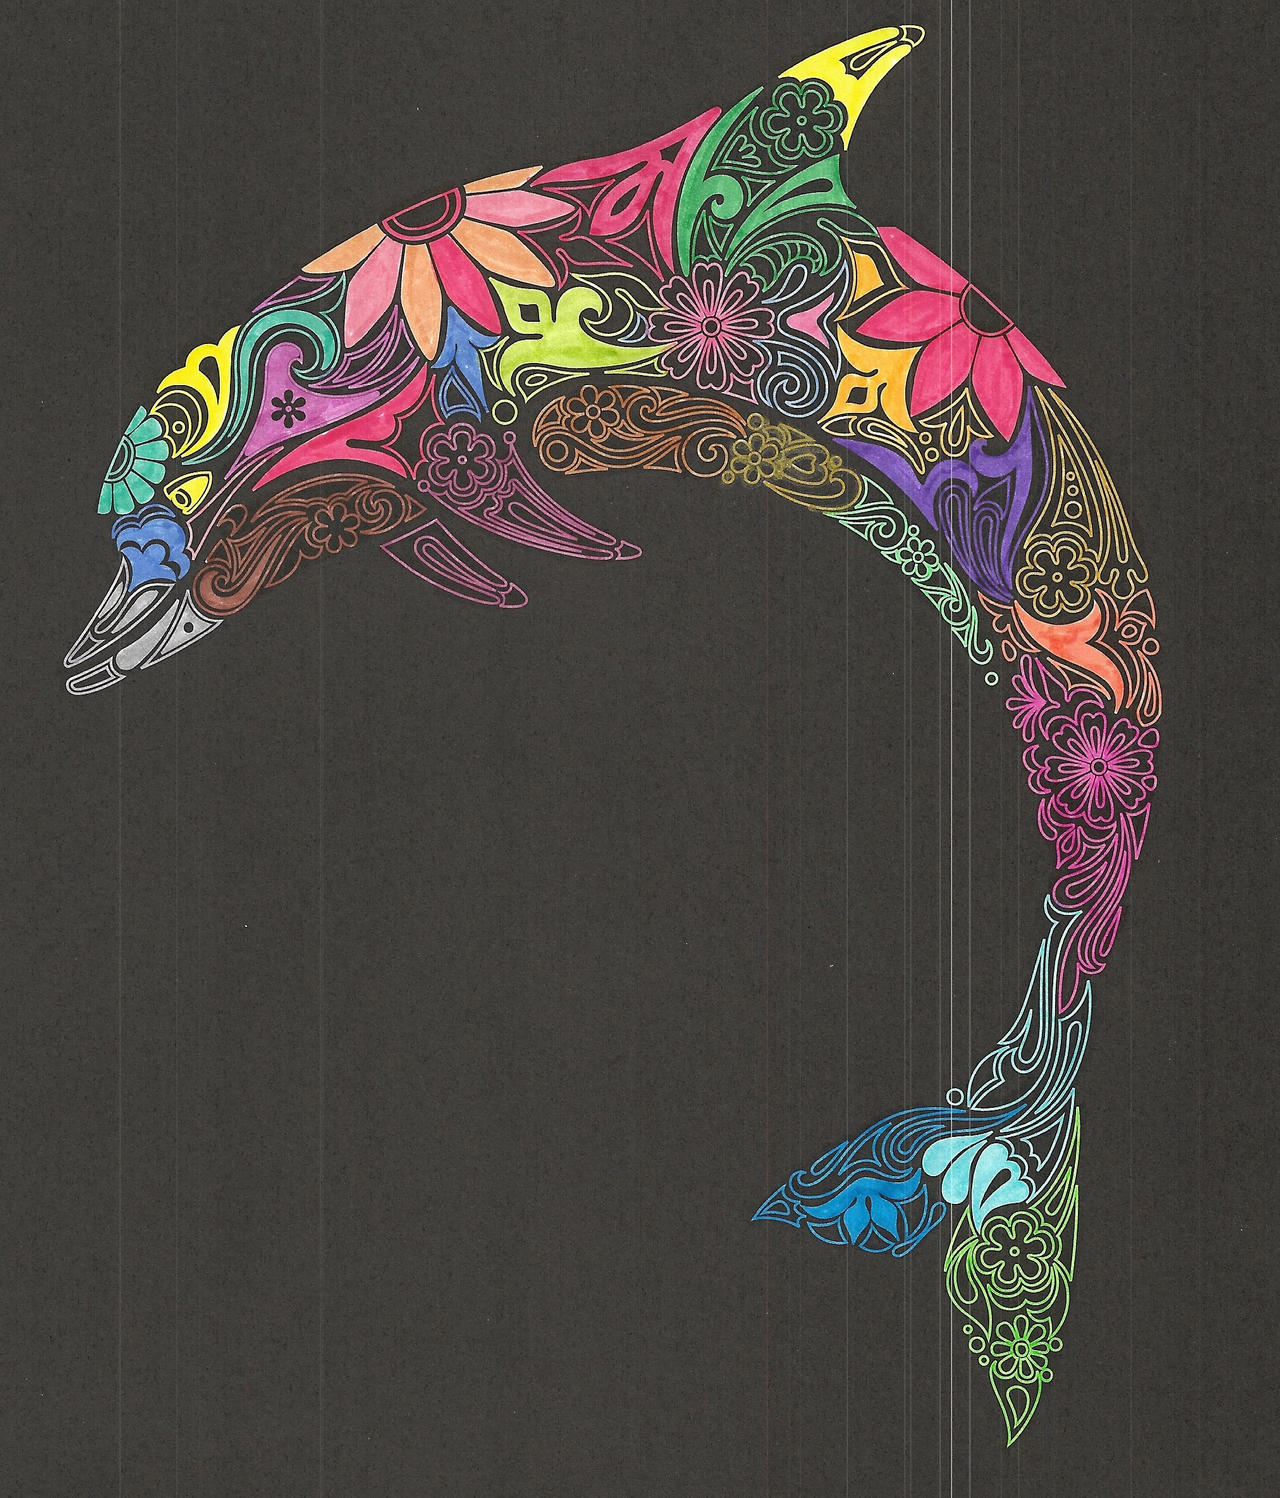 dauphin cahier de coloriage adulte by opale-malanea on DeviantArt